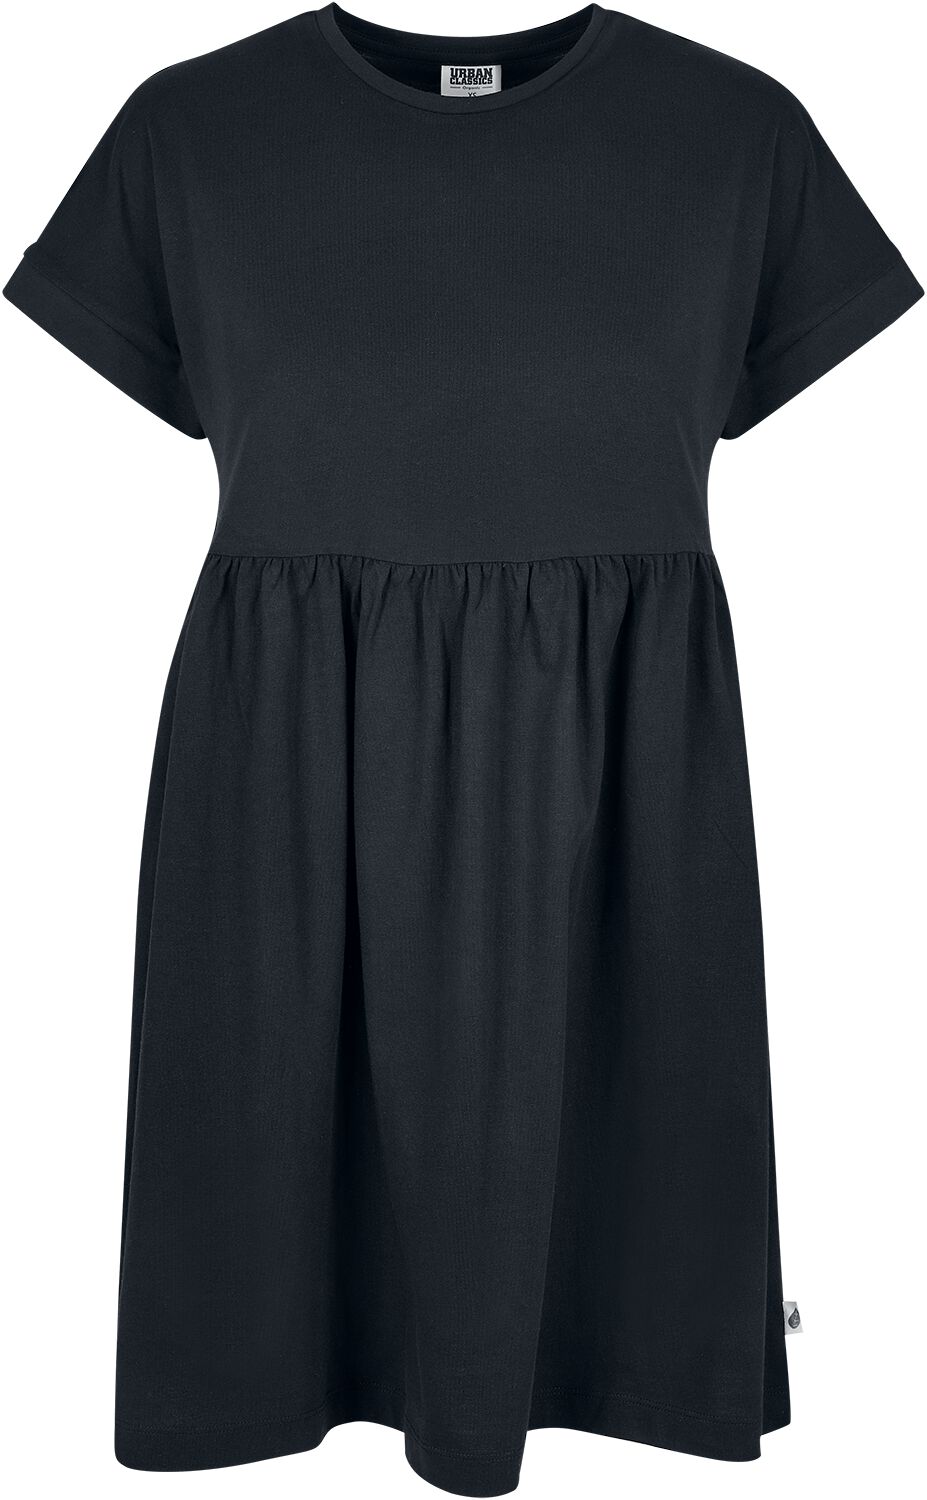 Urban Classics Ladies Organic Empire Valance Tee Dress Short dress black